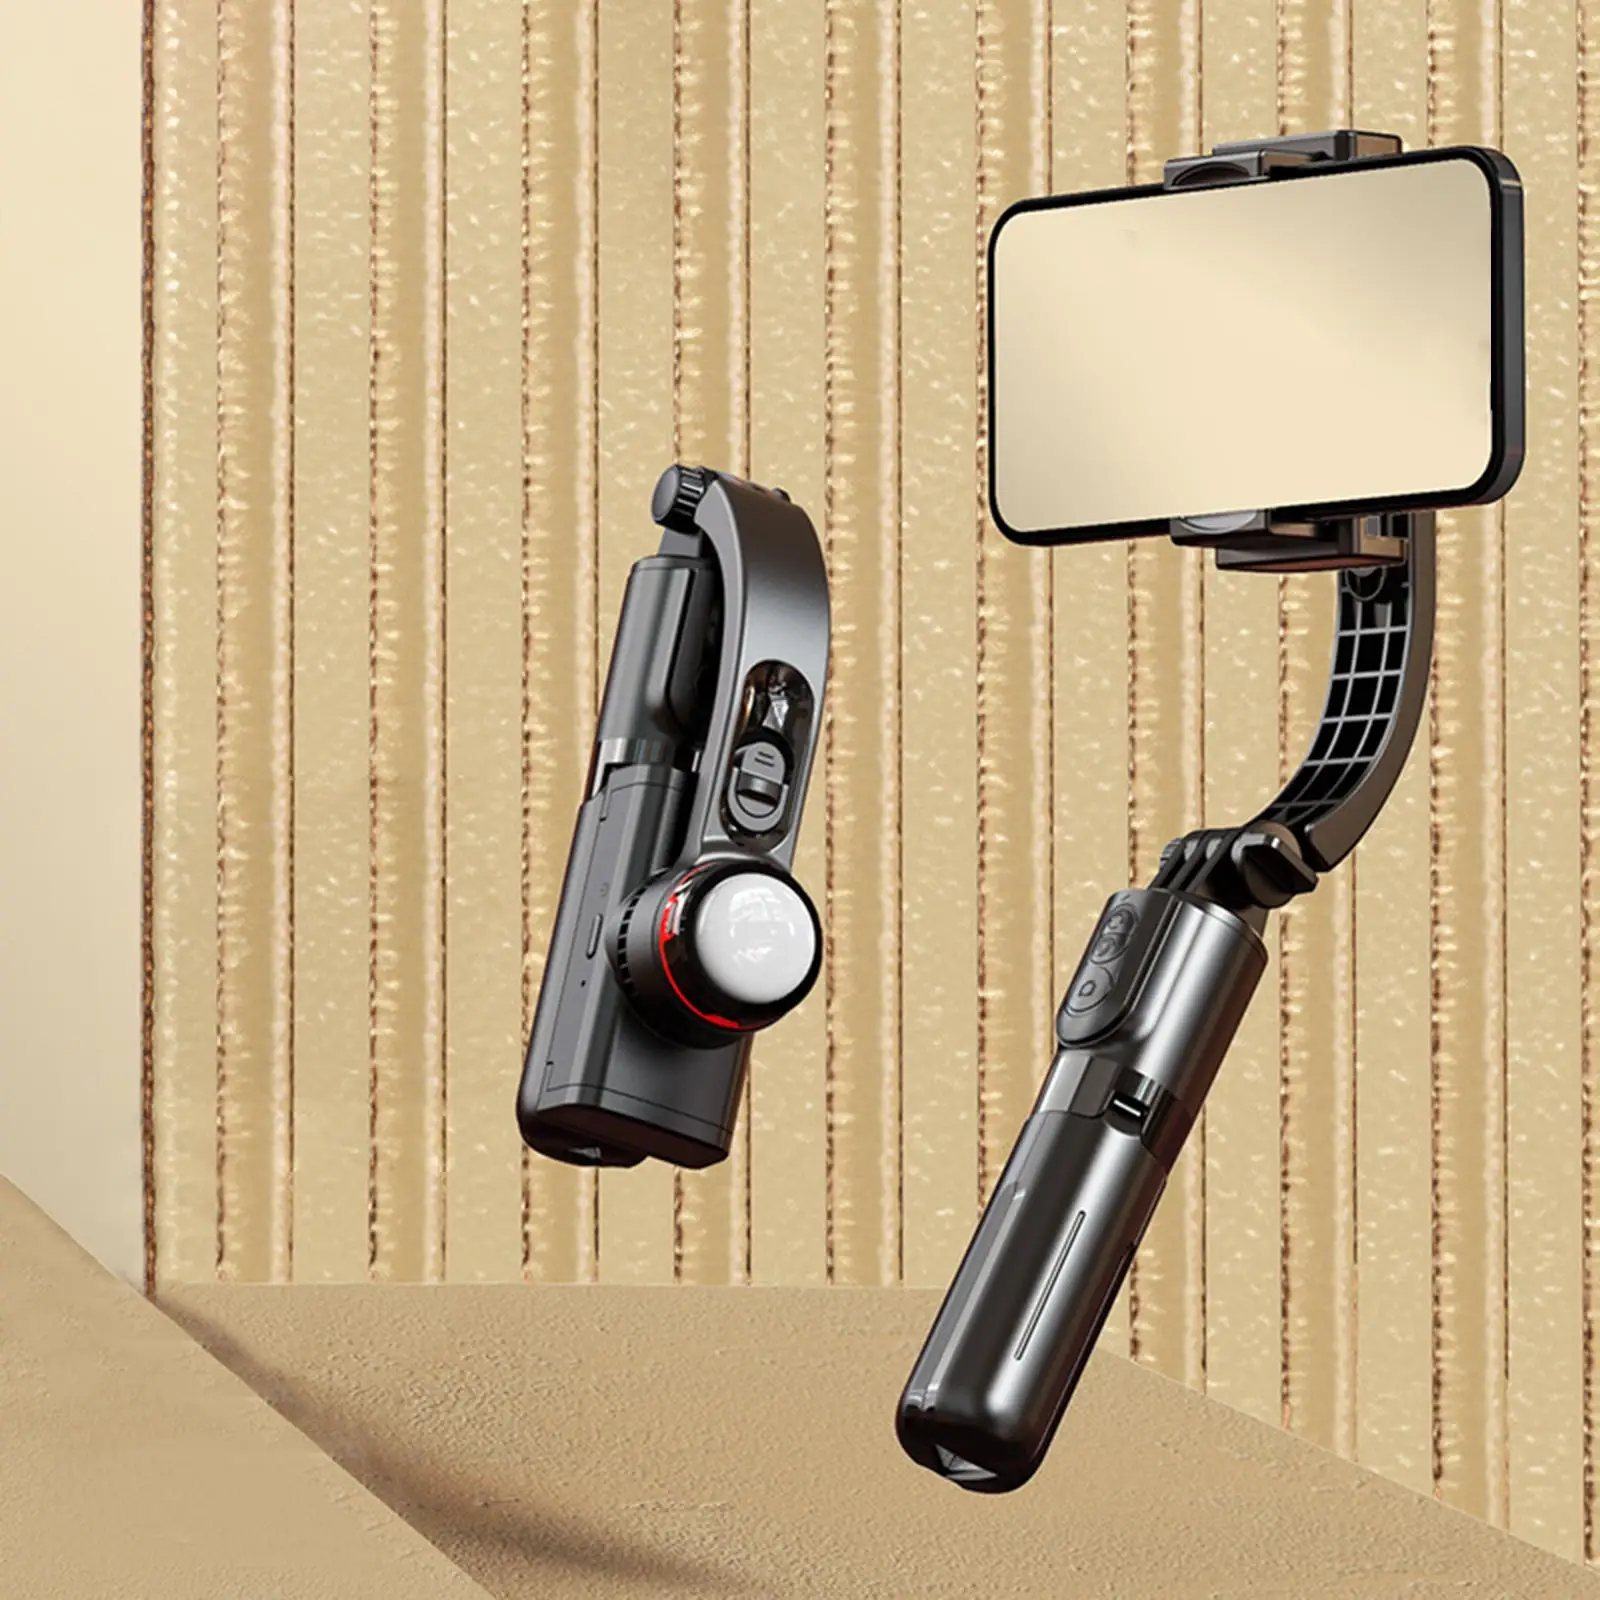 Gimbal Stabilizer 360° Rotation Anti Shaking Stand Vlogging Stabilizer with Wireless Remote Selfie Stick Tripod Phone Stabilizer